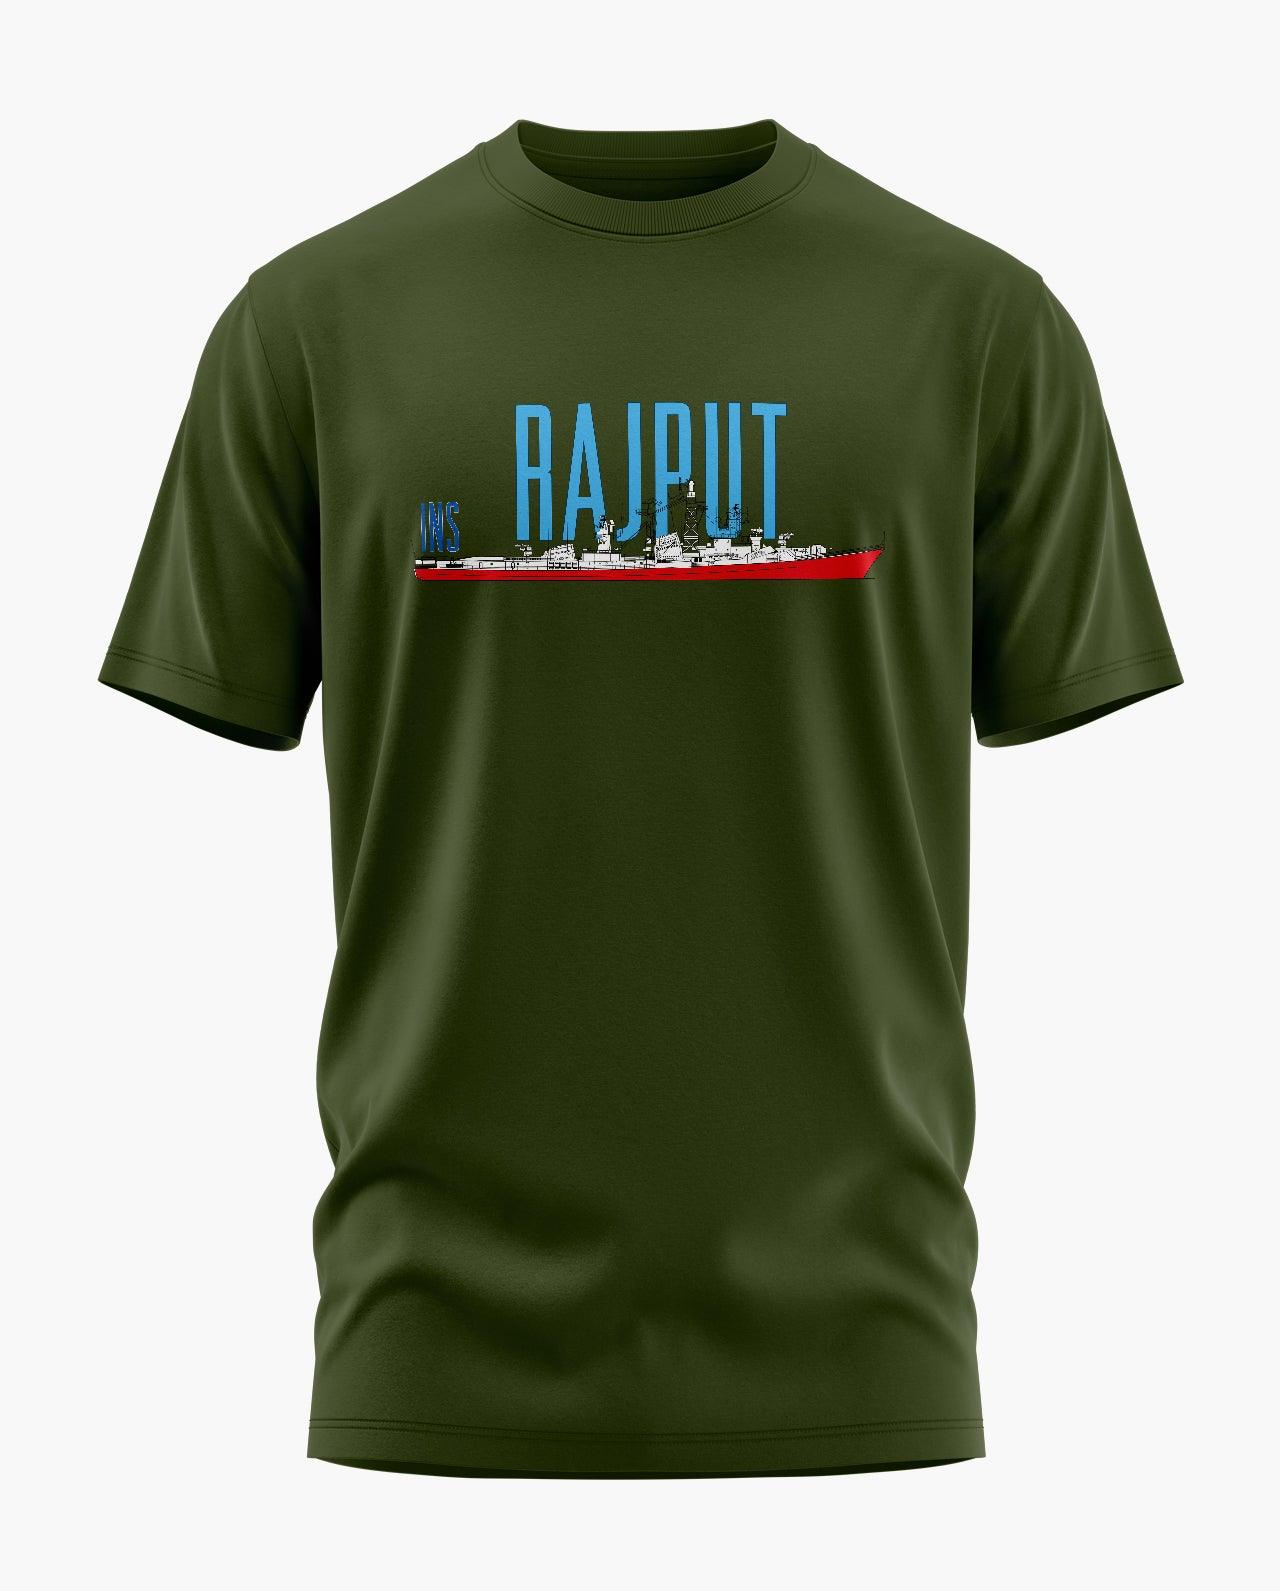 INS Rajput T-Shirt - Aero Armour